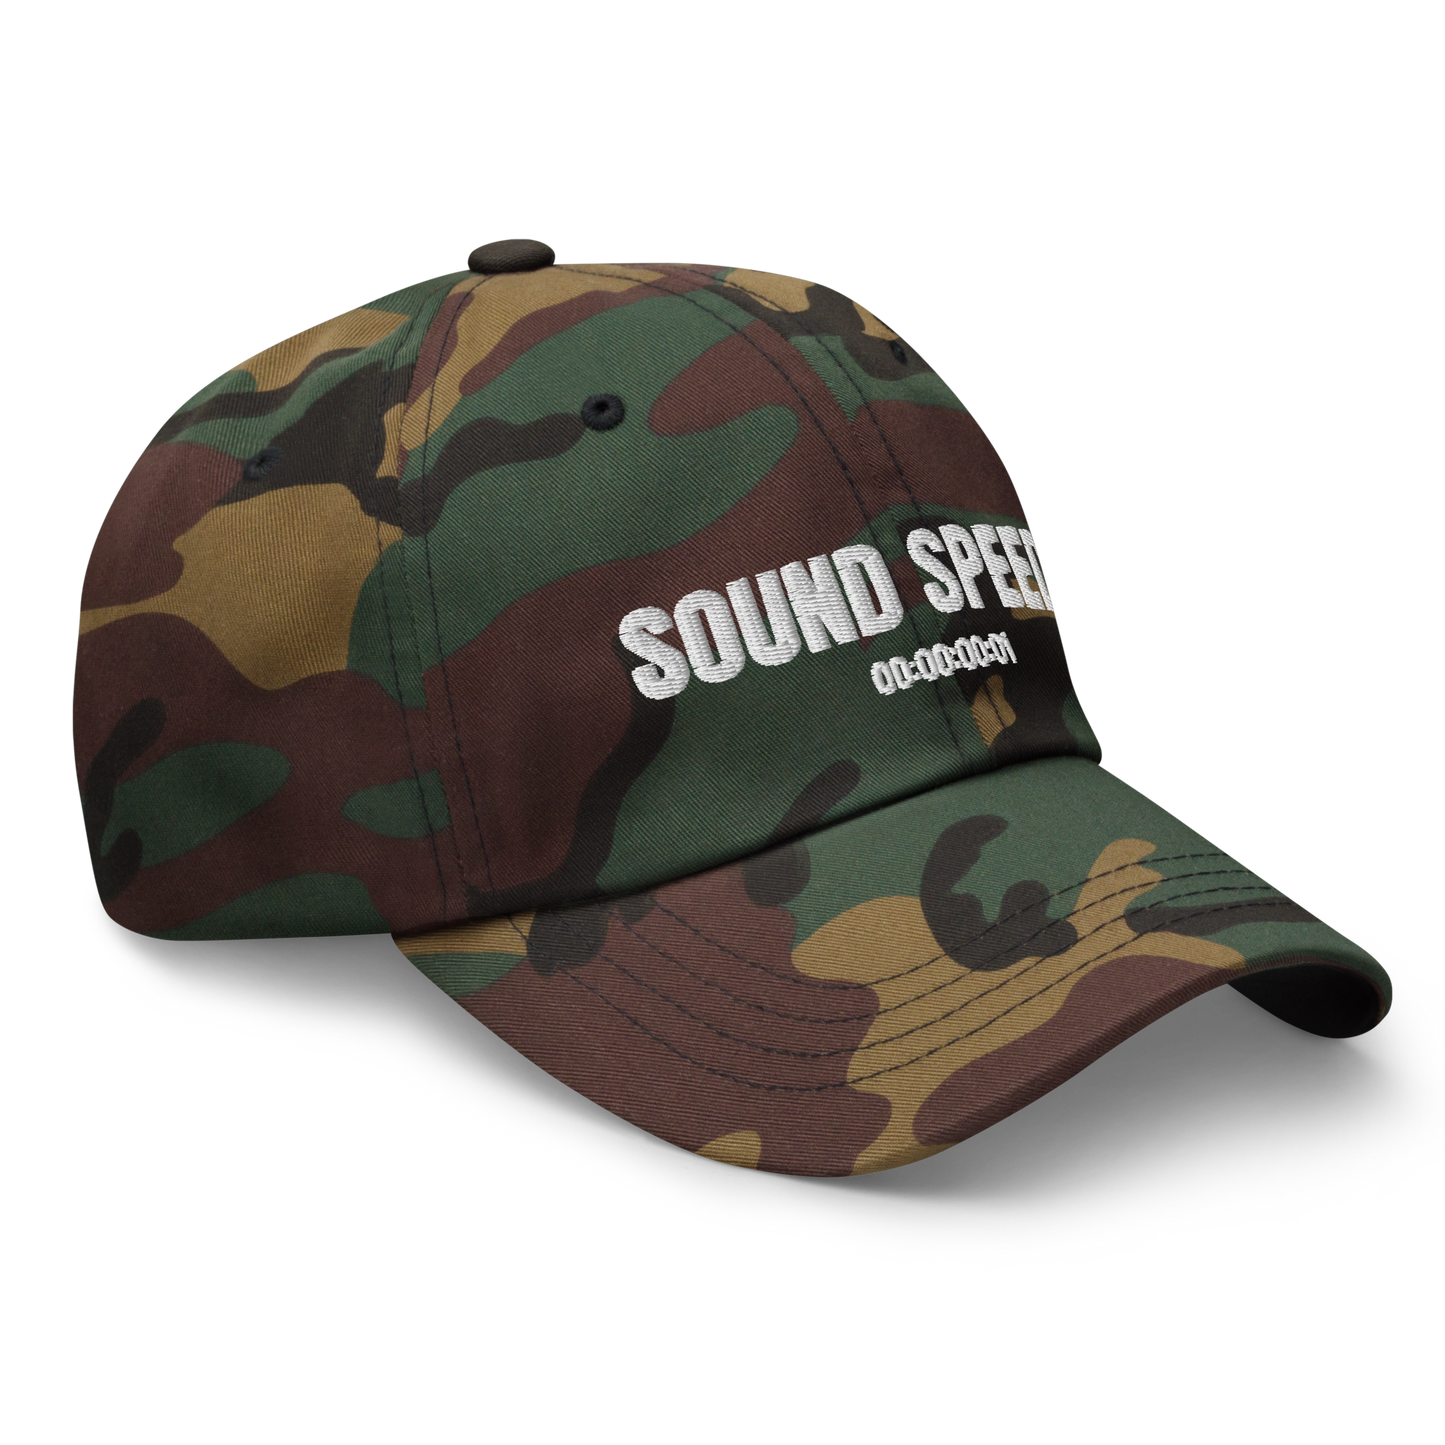 Sound Speeds Classic Dad Hat (Variant A)